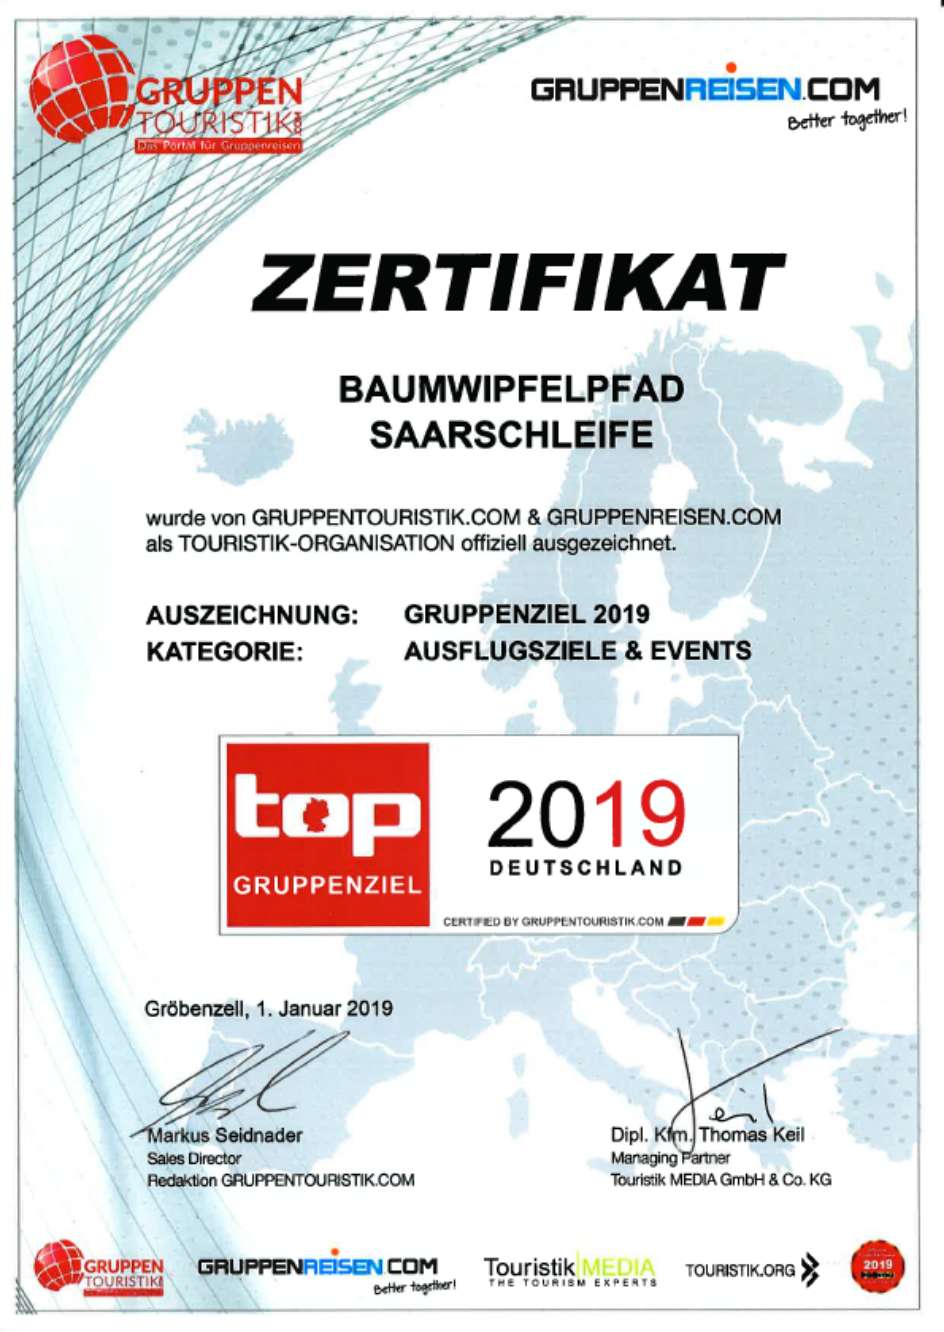 The Treetop Walk Saarschleife has been awarded as group destination 2019 by Gruppentouristik.com.